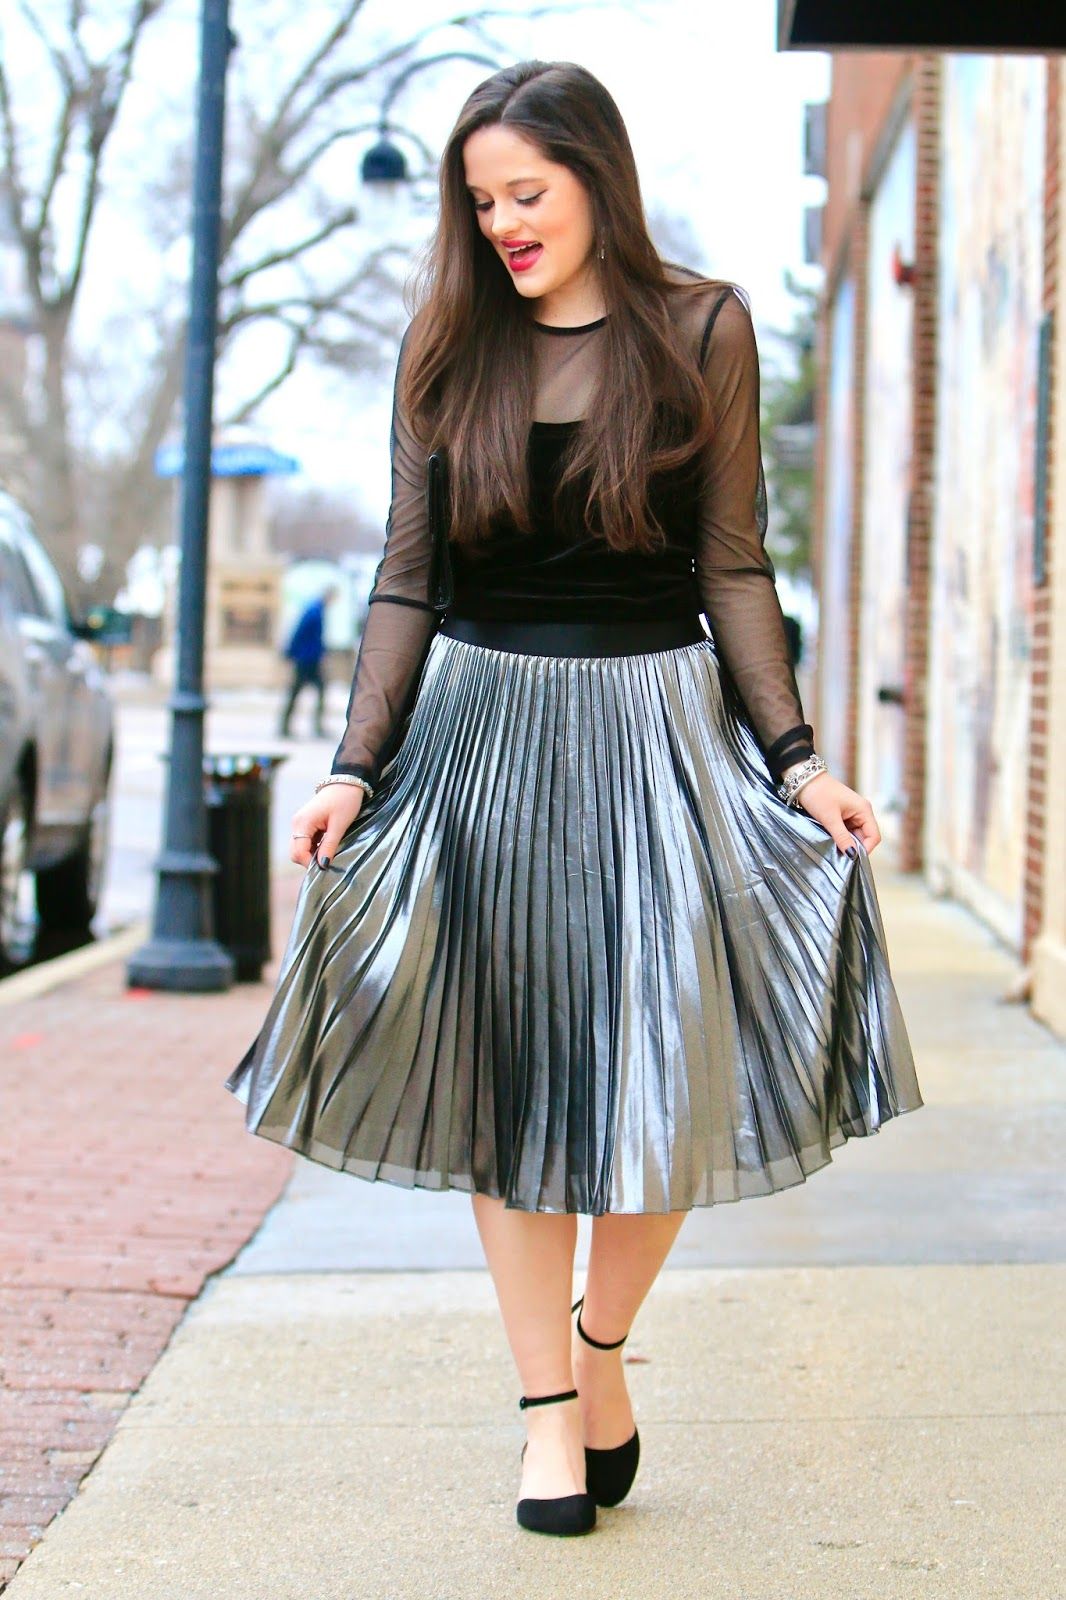 Silver Metallic Skirt Outfit Ideas